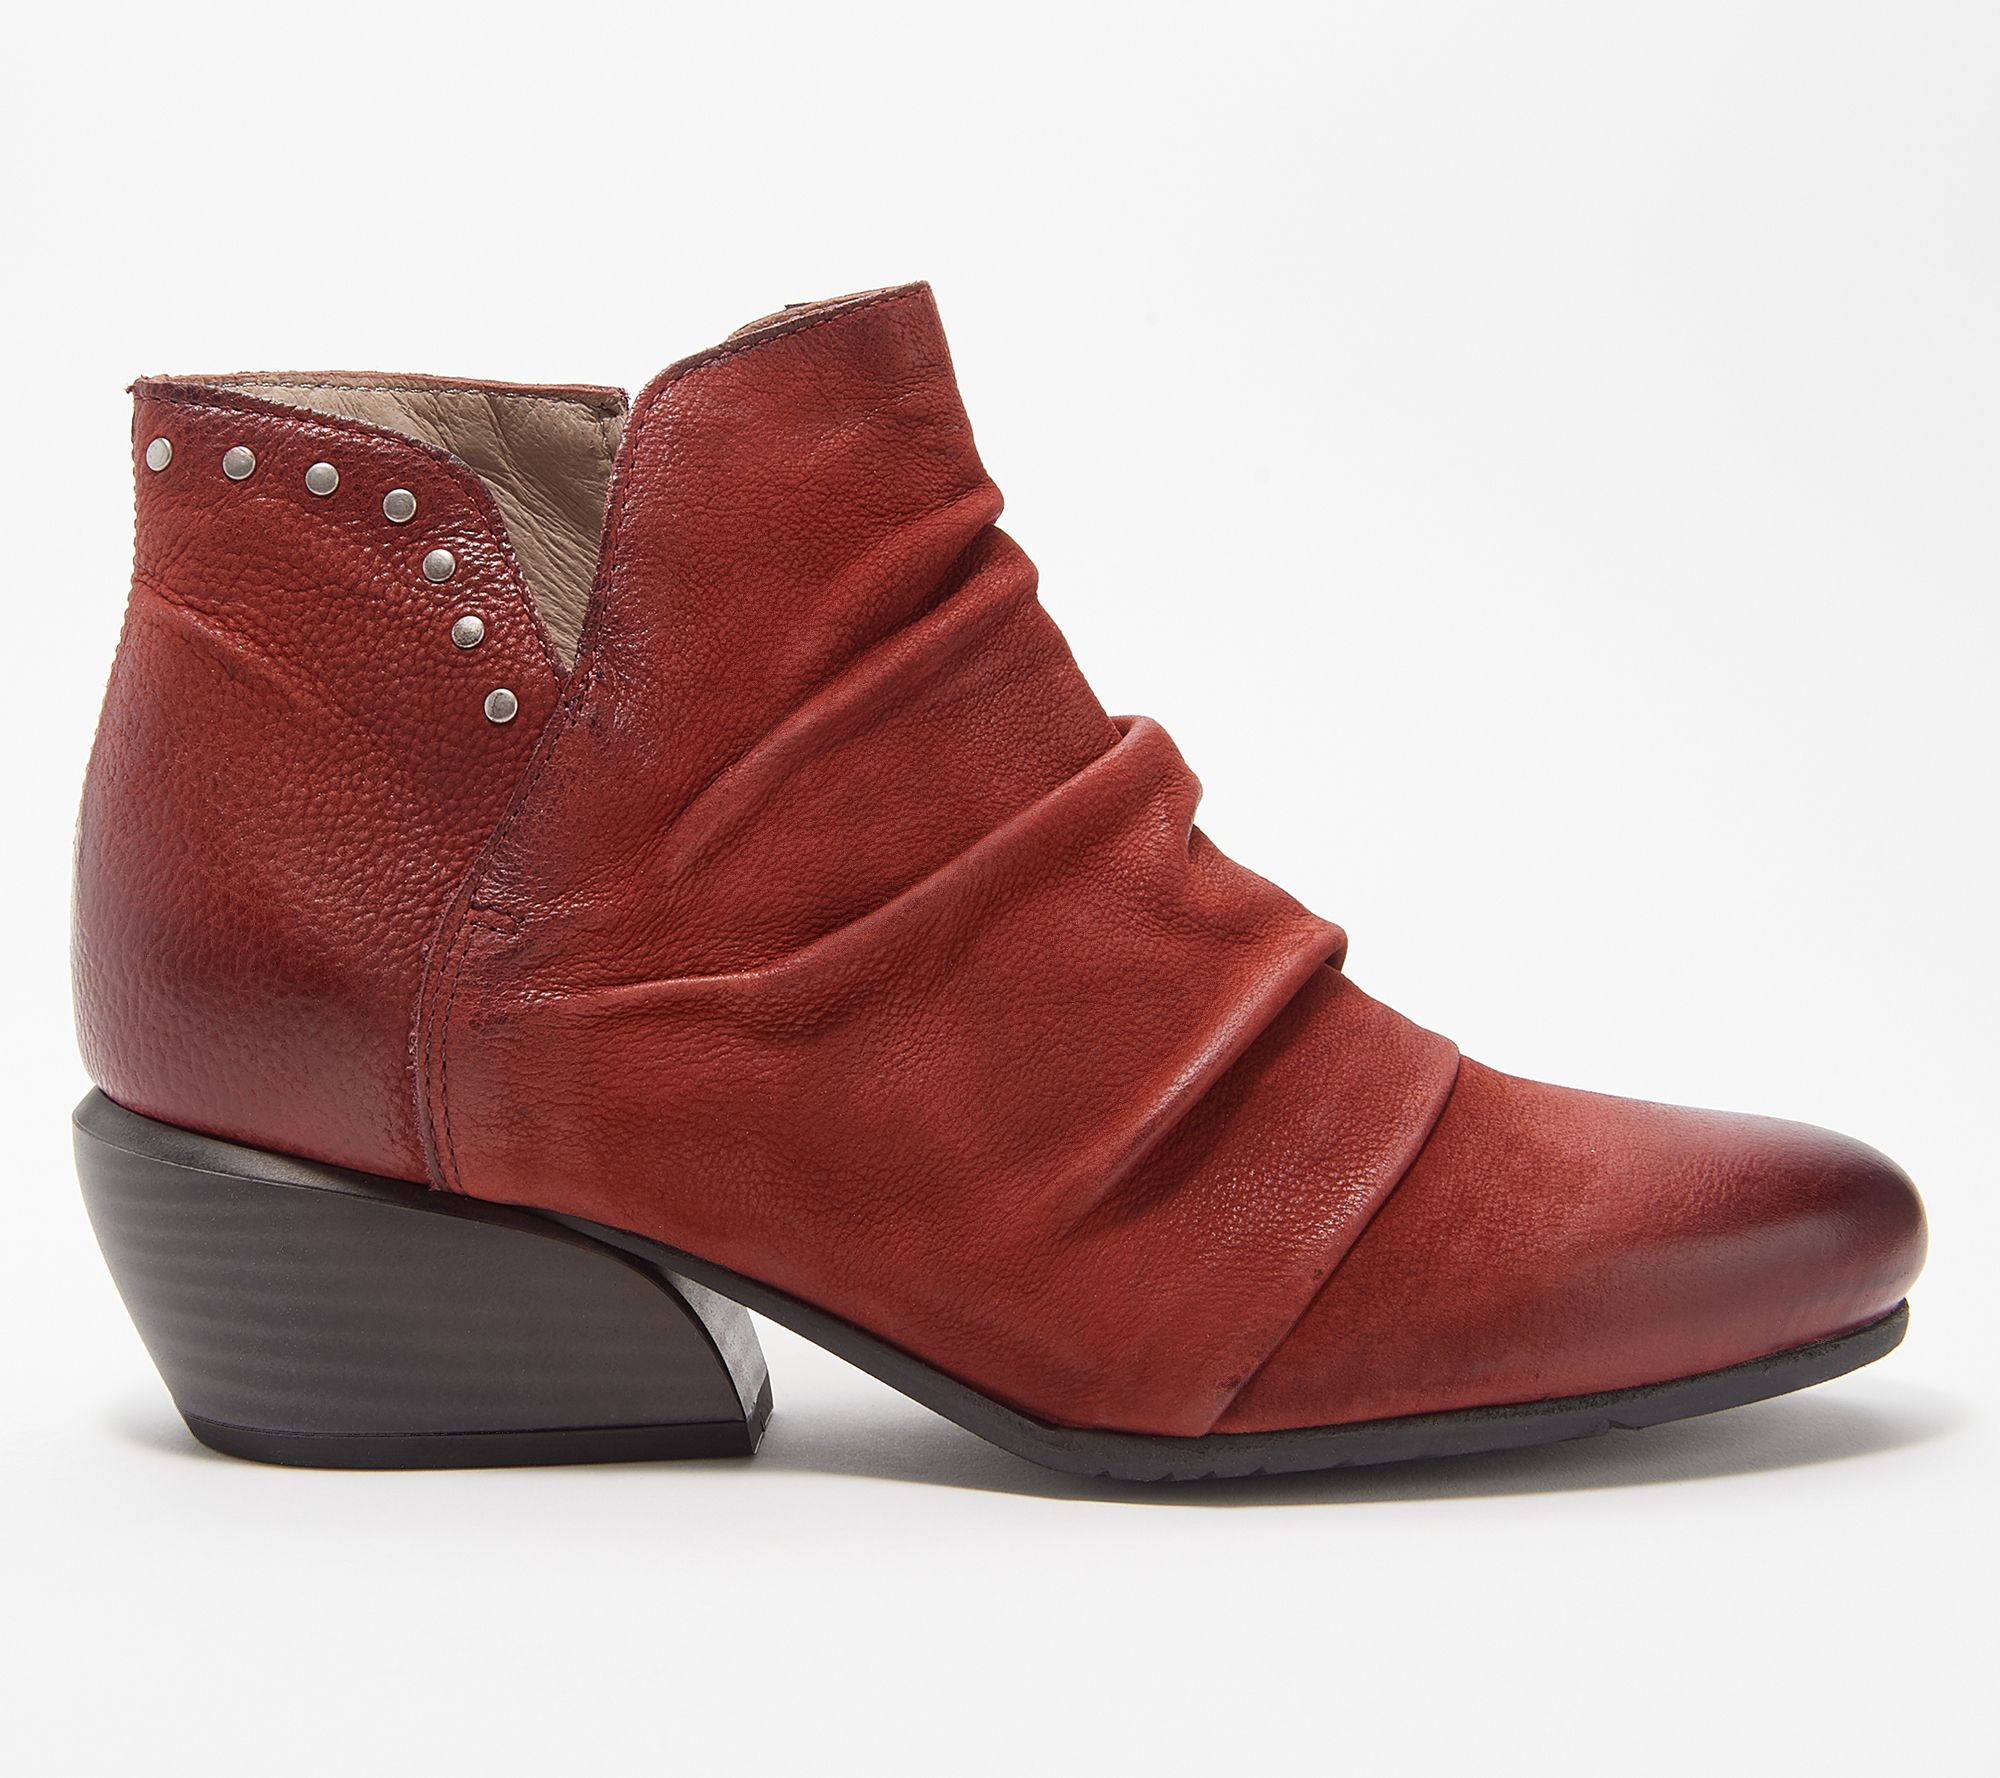 Miz Mooz Leather Studded Ankle Boots - Leon - QVC.com